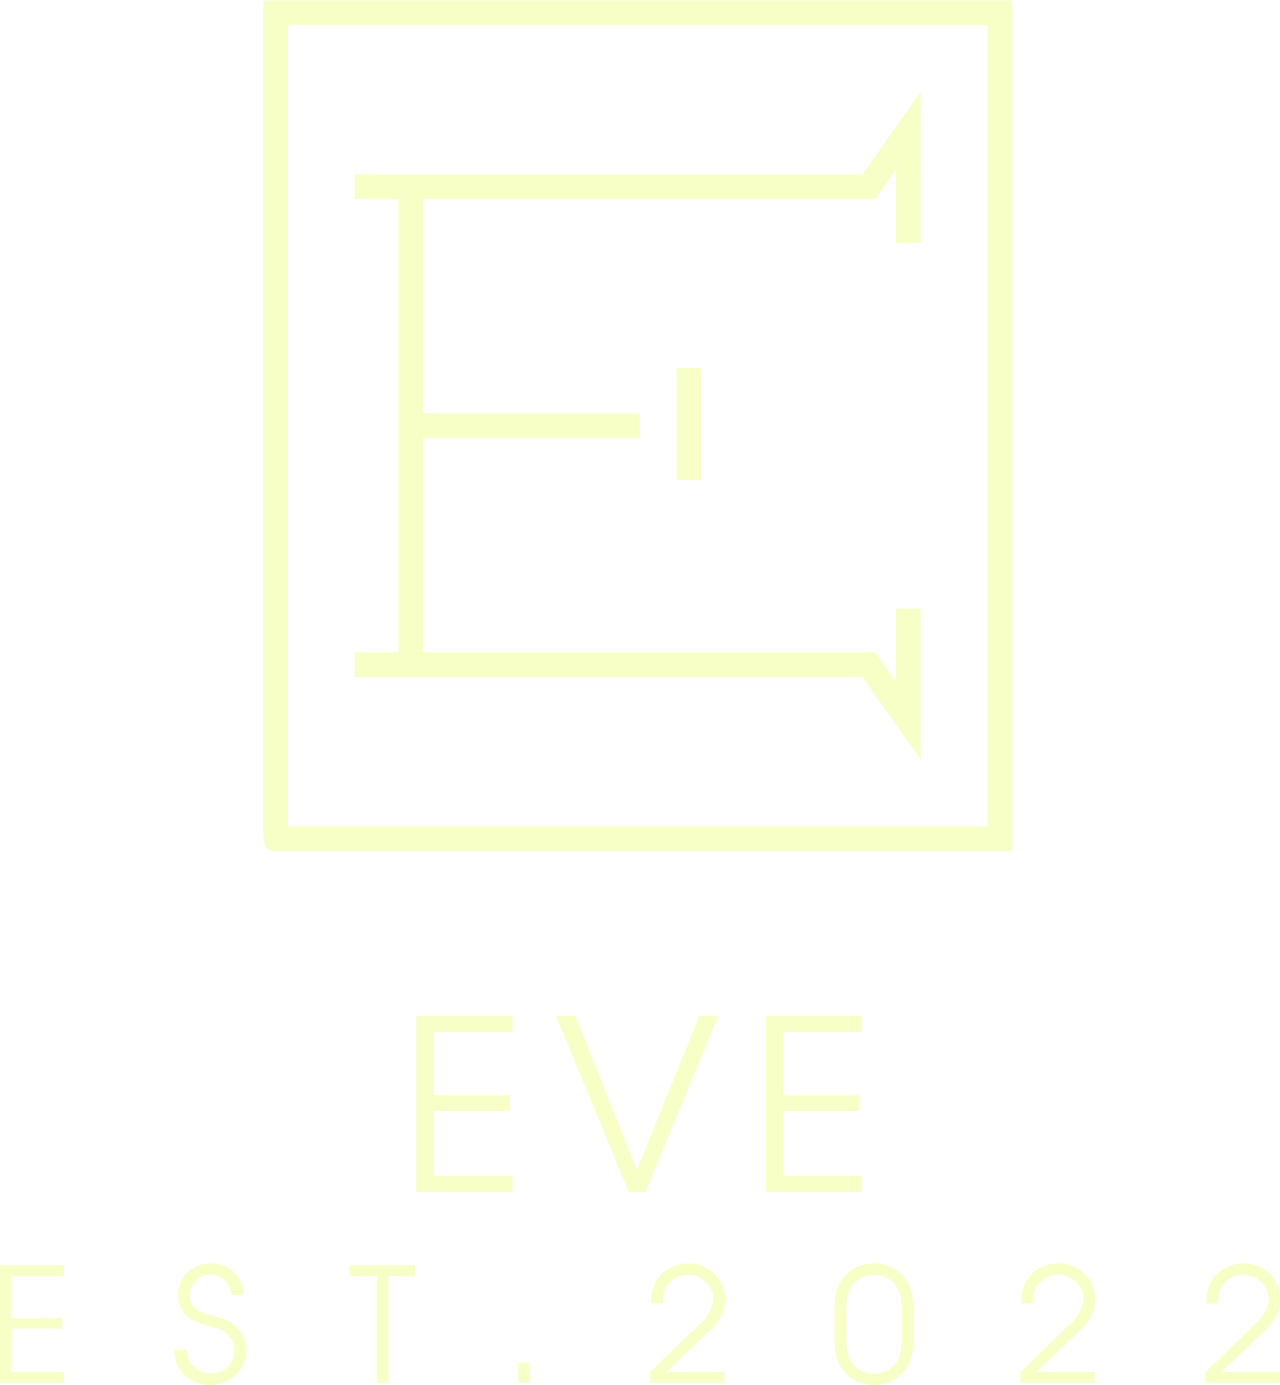 EVE's logo